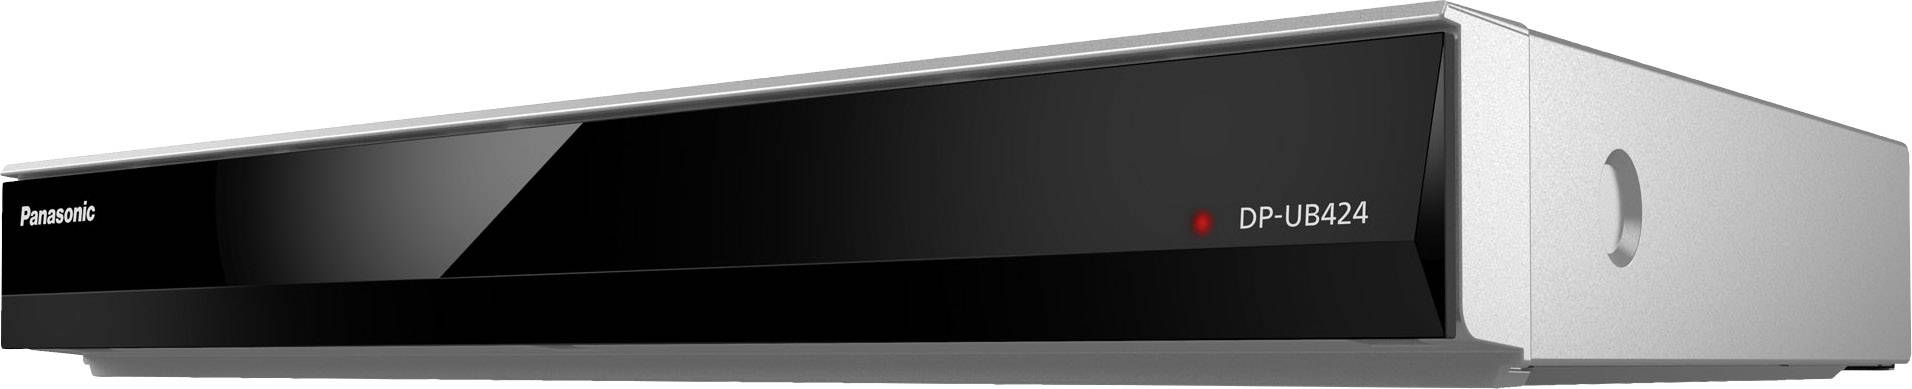 Panasonic DP-UB424 UHD Blu-ray-Player 4K WLAN, Smart Ultra Alexa, HD, unterstützt Assistan Amazon Google kaufen unterstützt TV